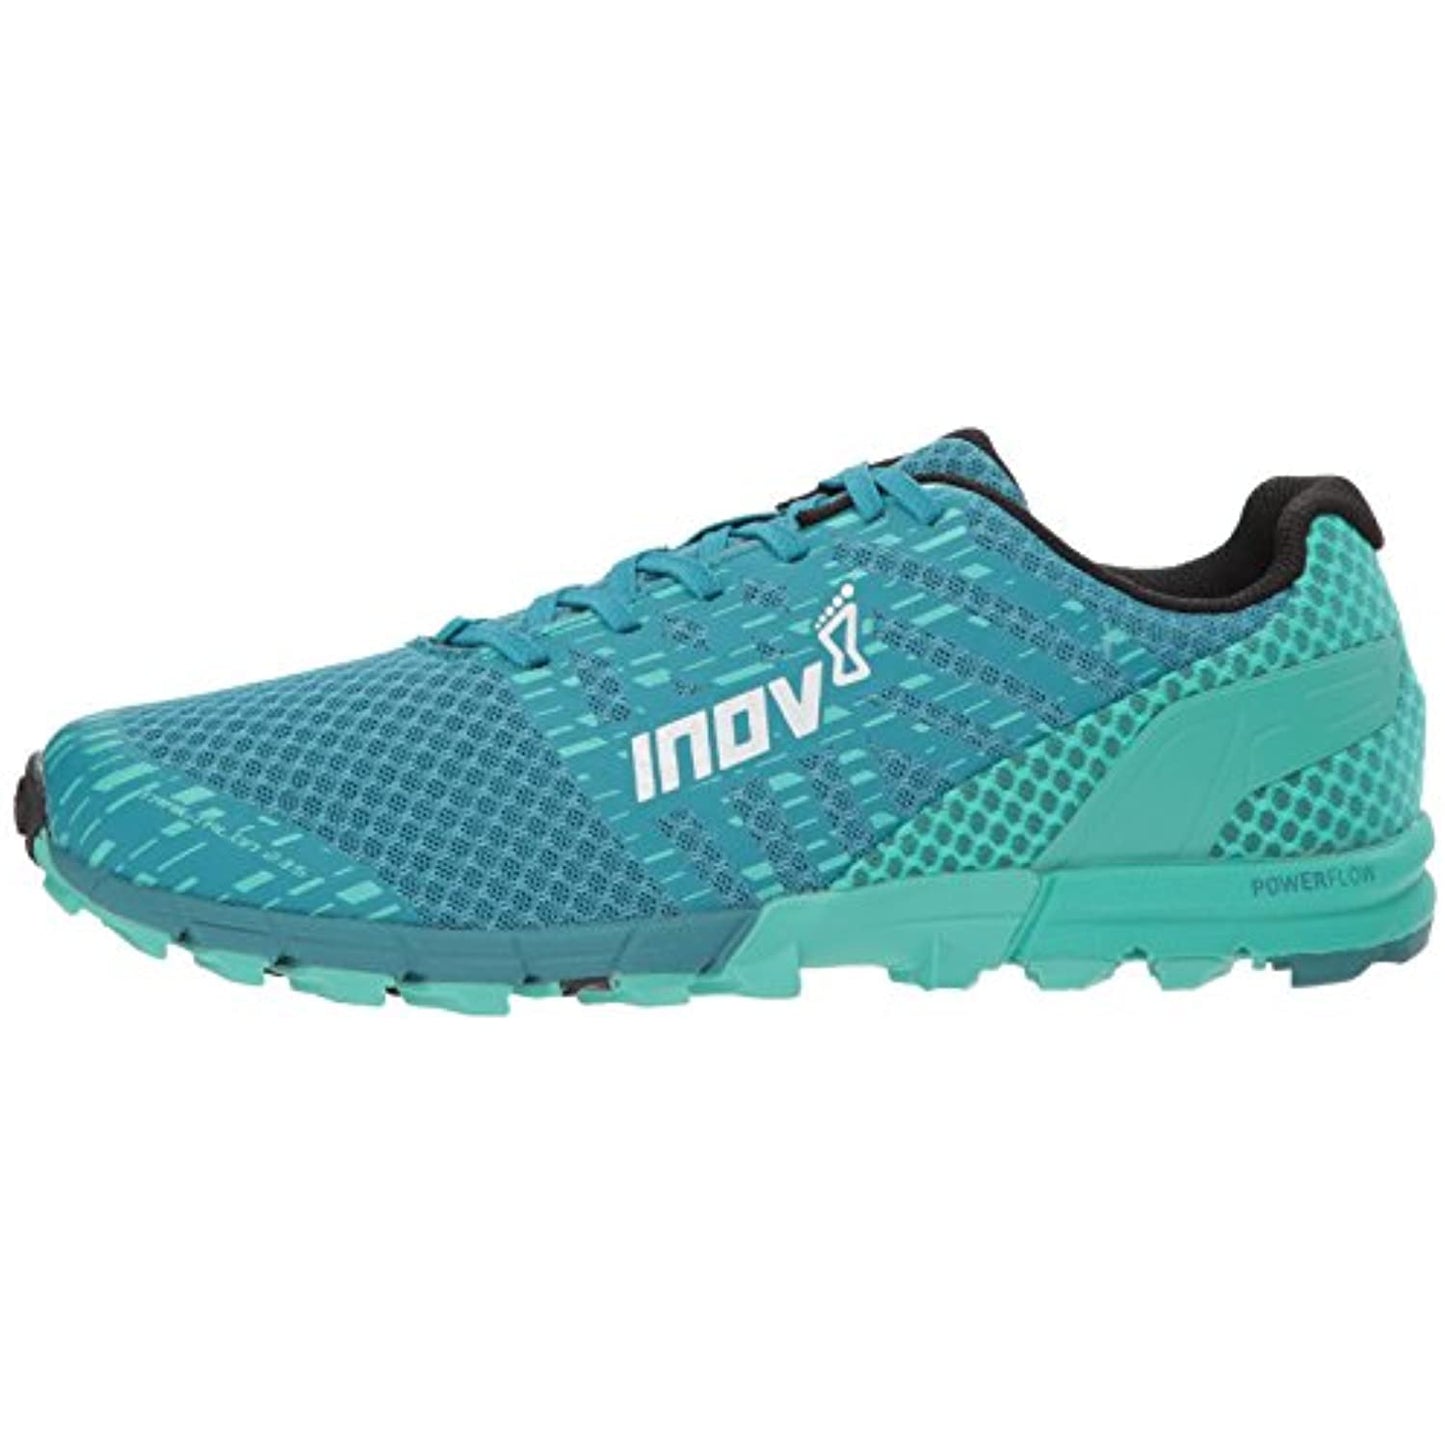 Inov-8 Men's Trailtalon 235 (W) Trail Running Shoe, Teal